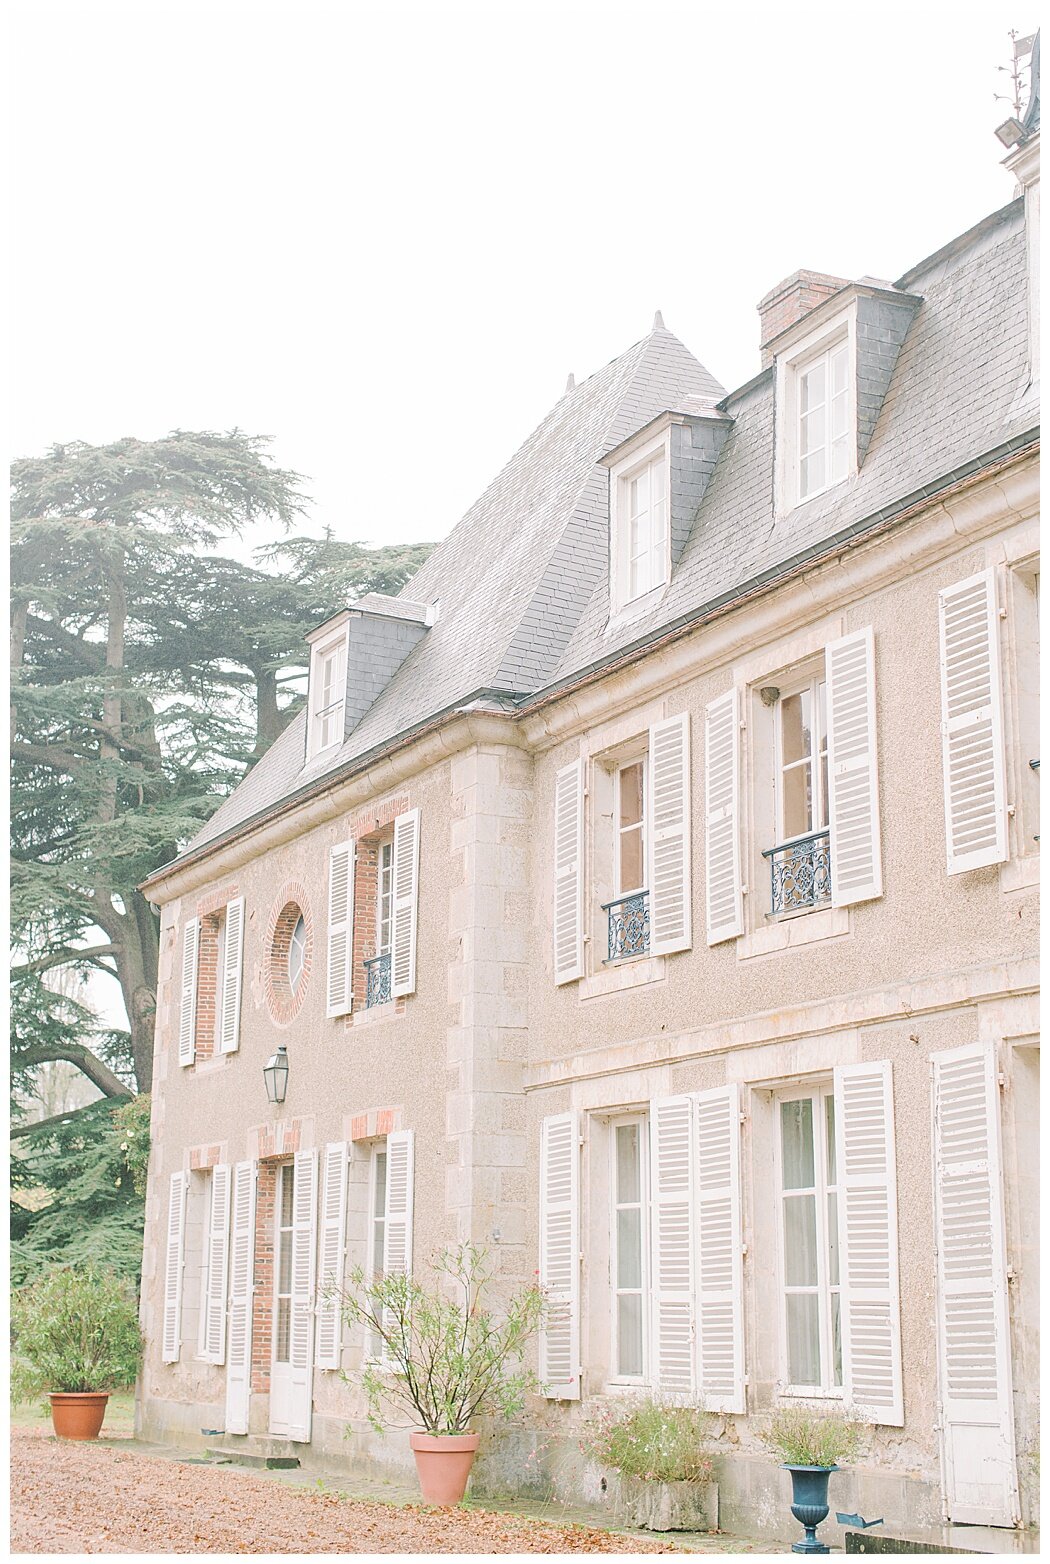 destination-weddings-france-chateau-bouthonvilliers_3074.jpg